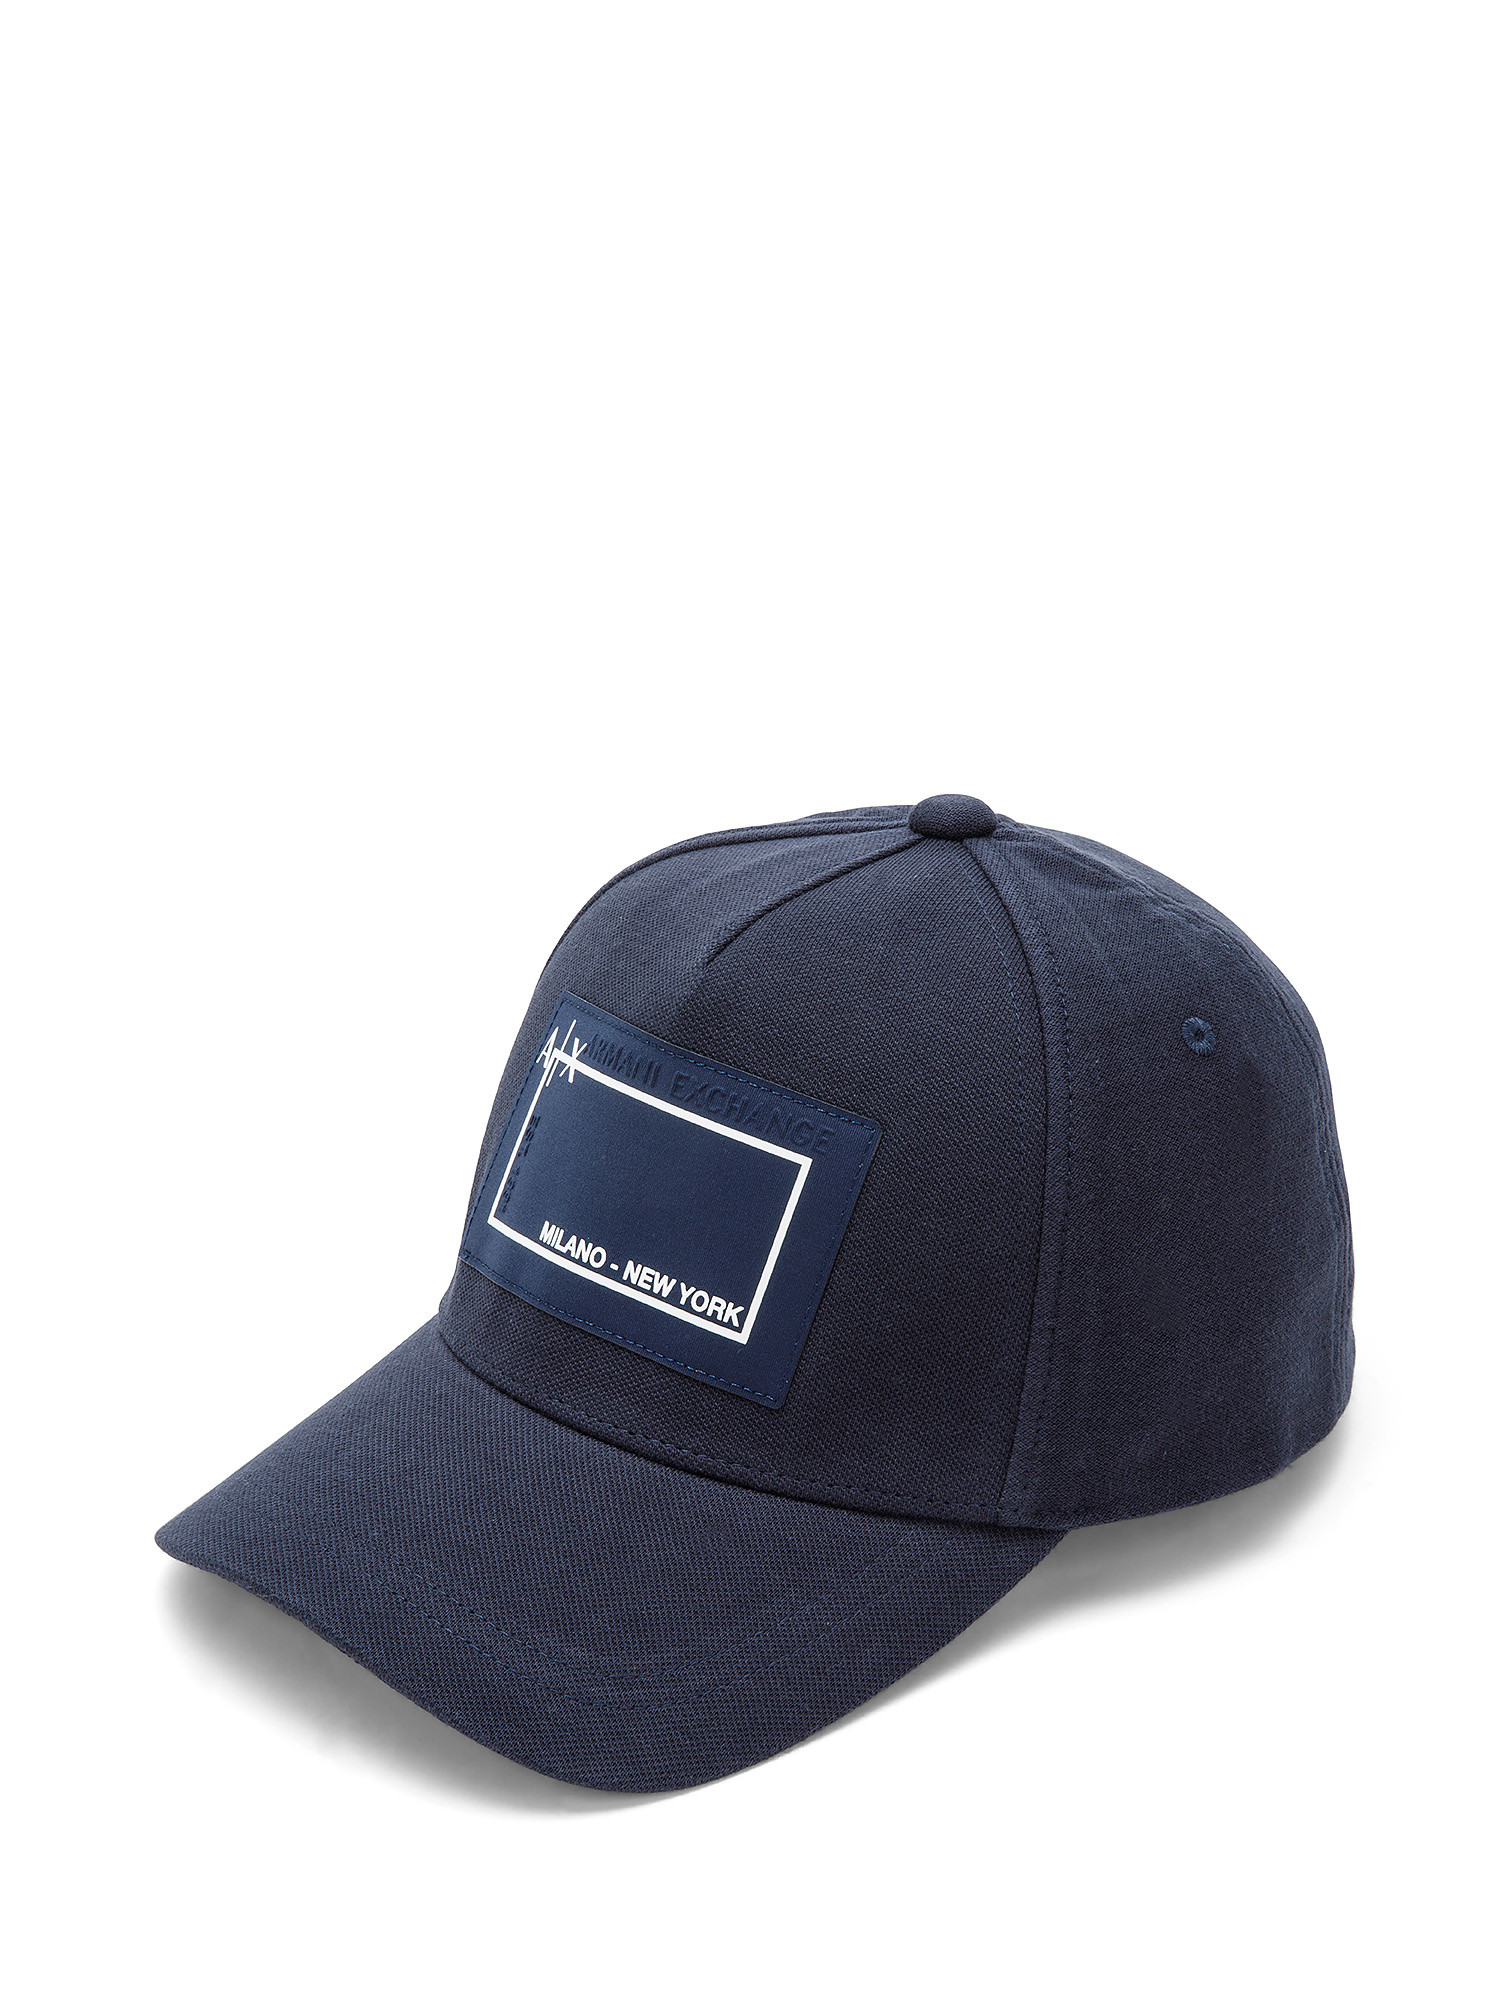 Armani Exchange - Cappello in piquet di cotone con visiera, Blu scuro, large image number 0